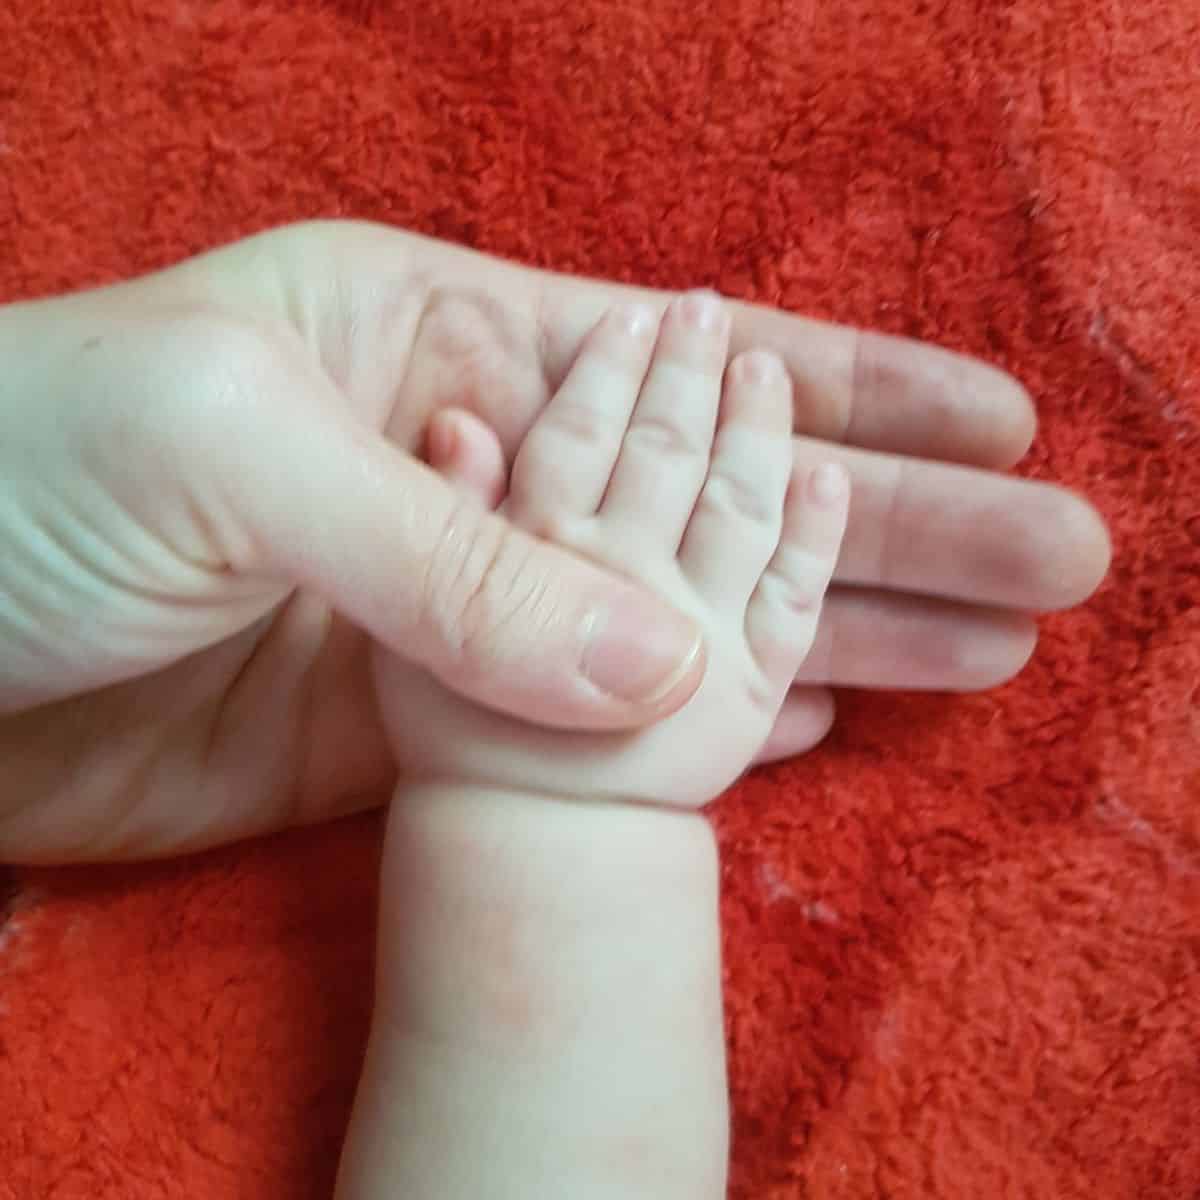 mom's hand holding baby's hand